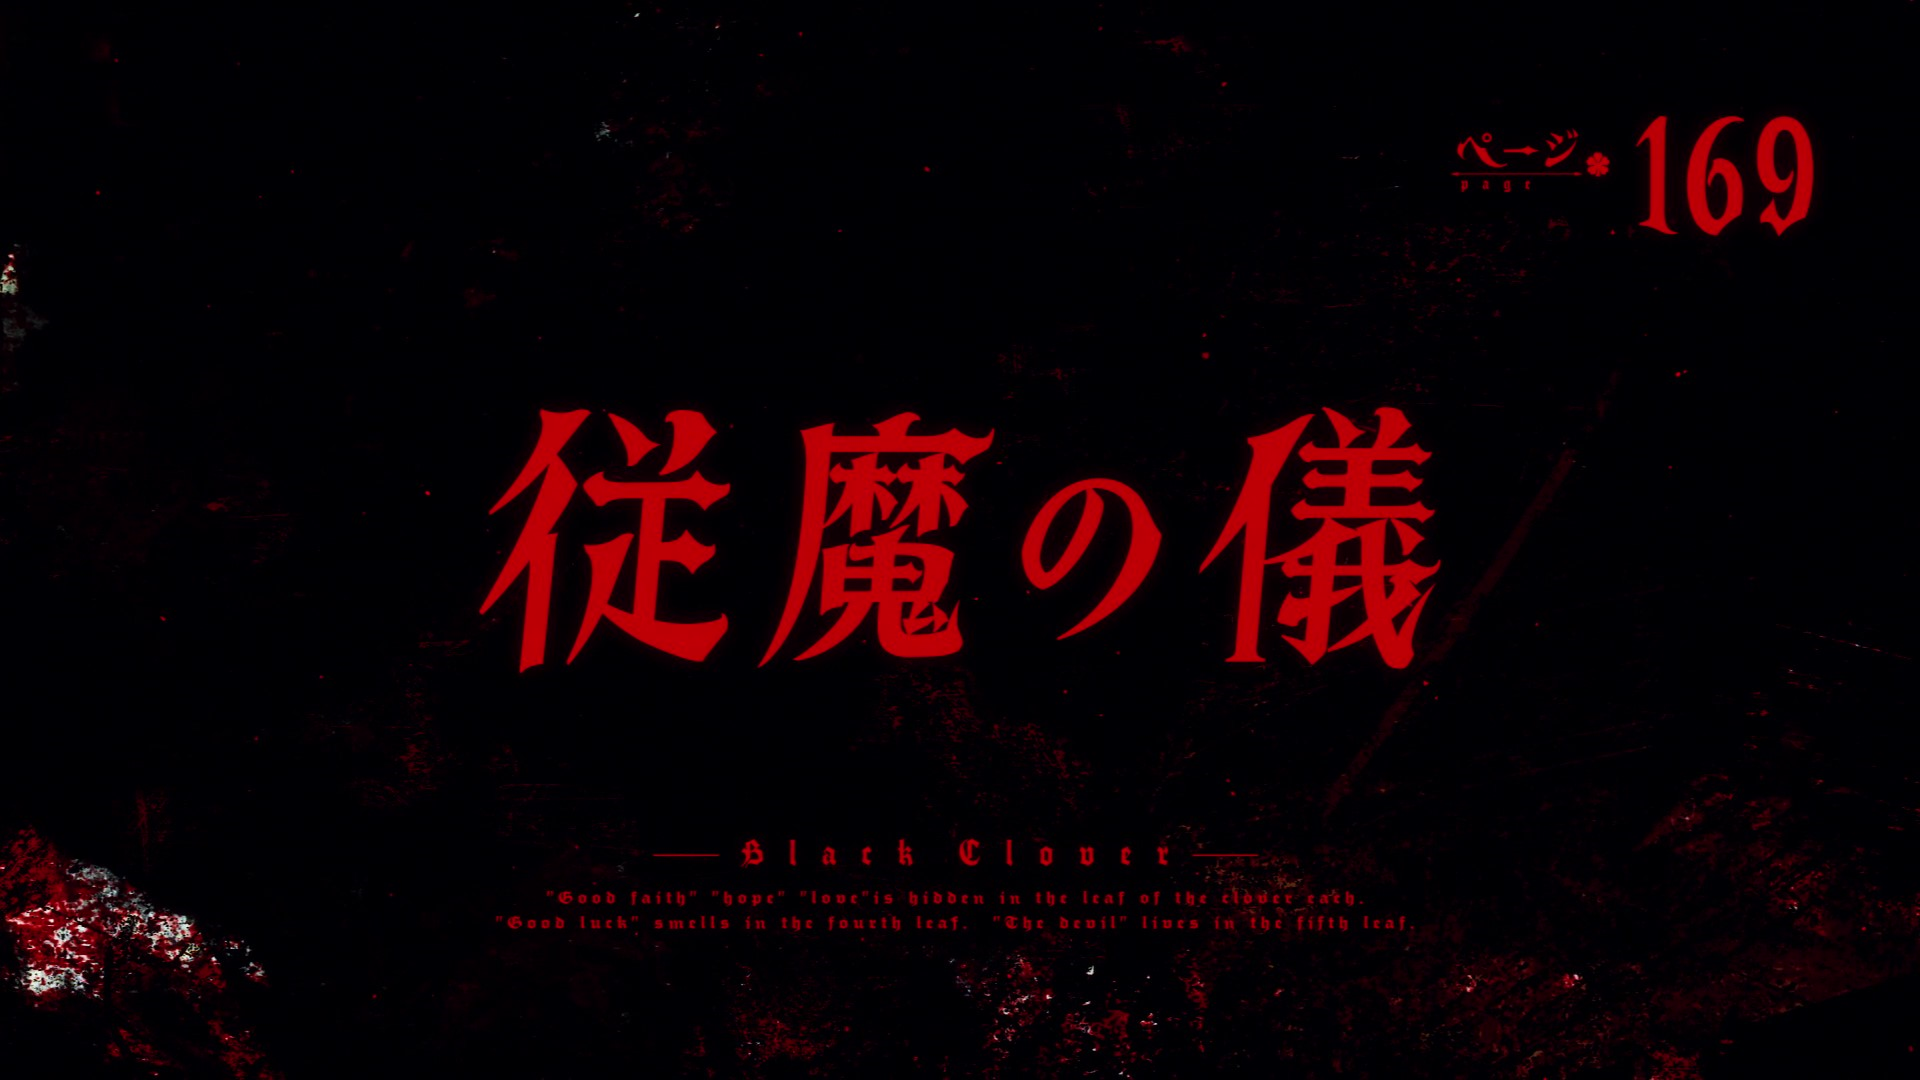 Episode 169 - Black Clover - Anime News Network